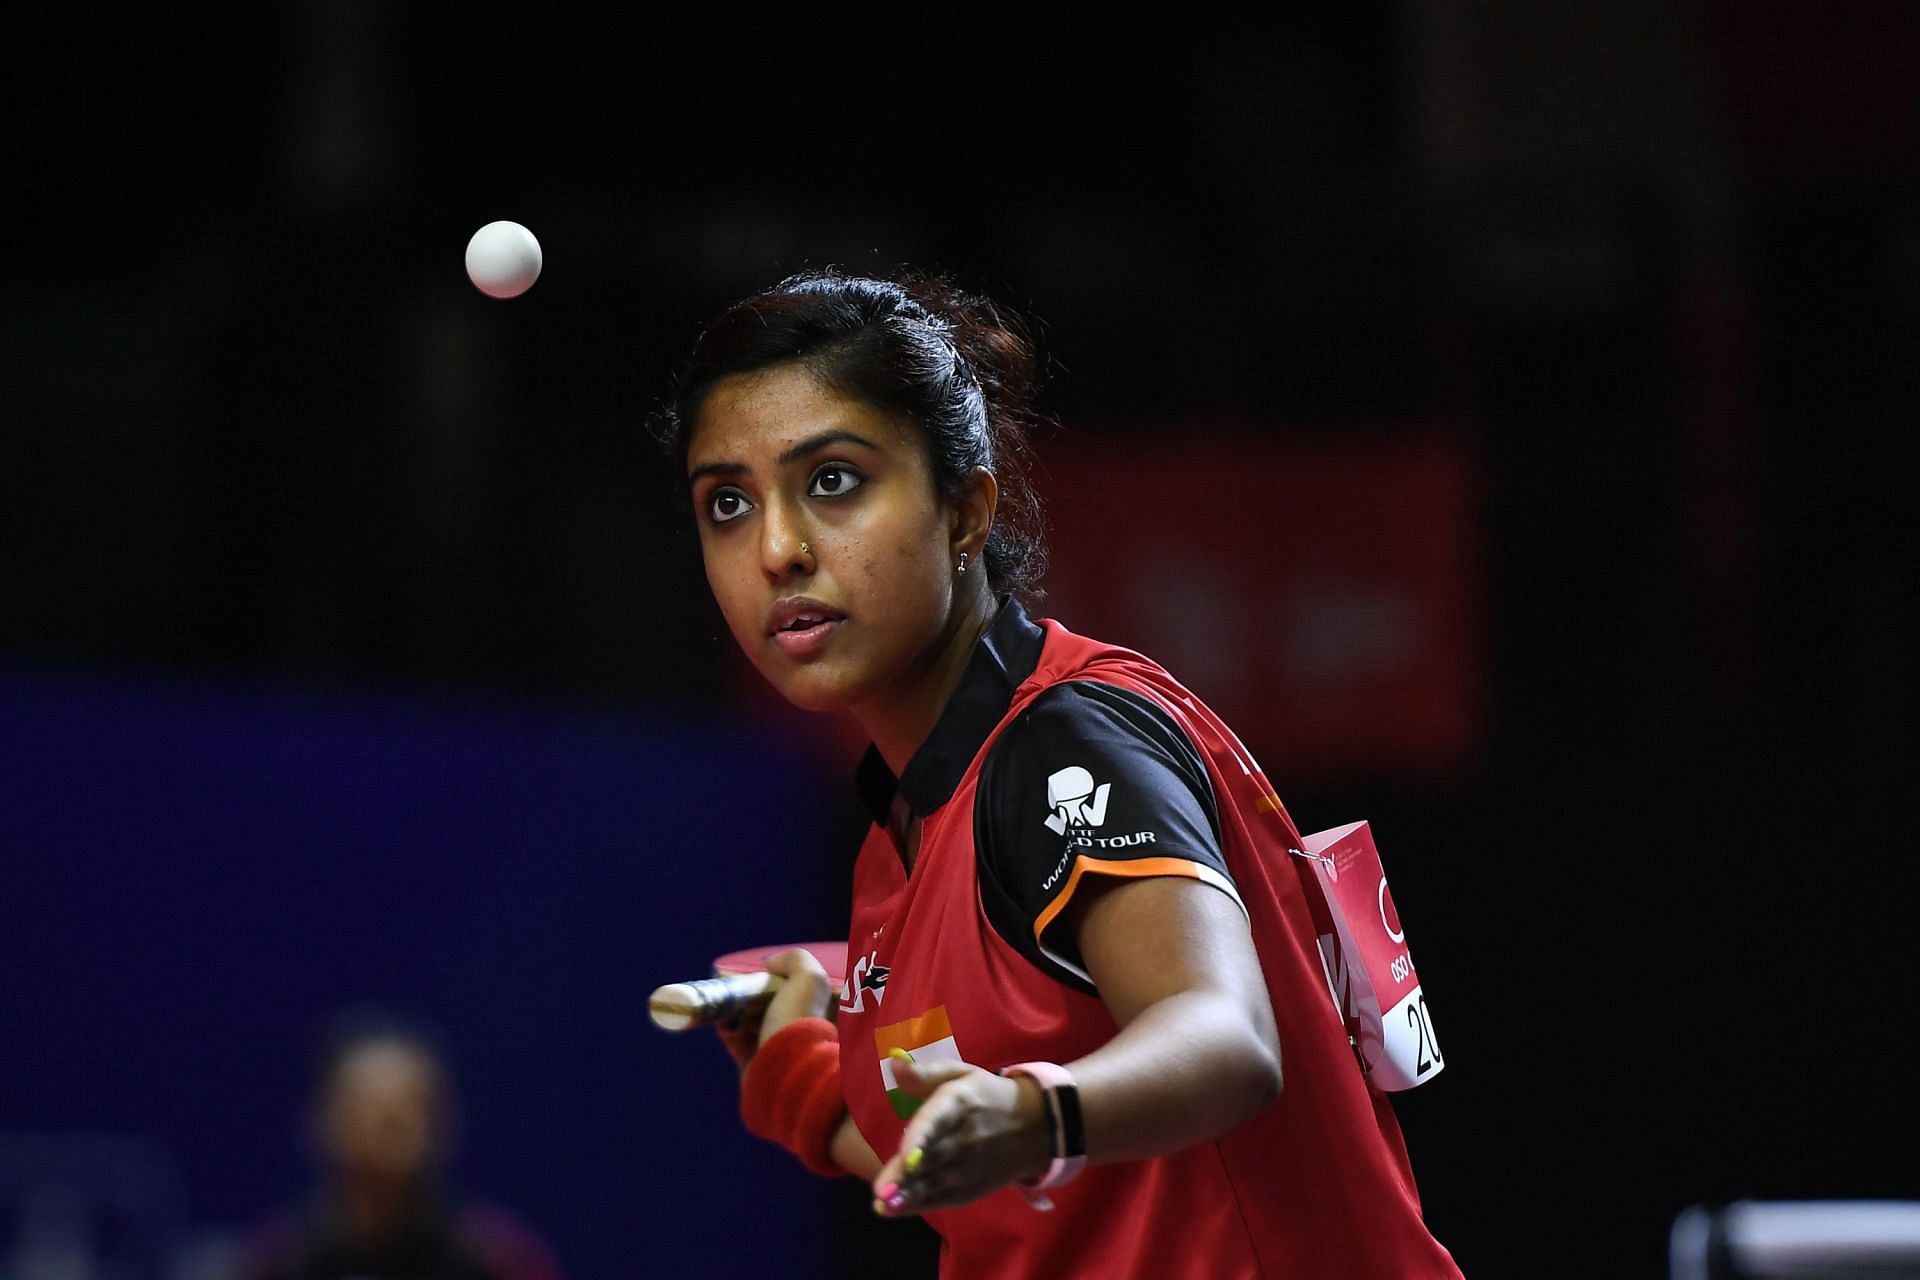 Ayhika Mukherjee in action. (PC: Getty Images)